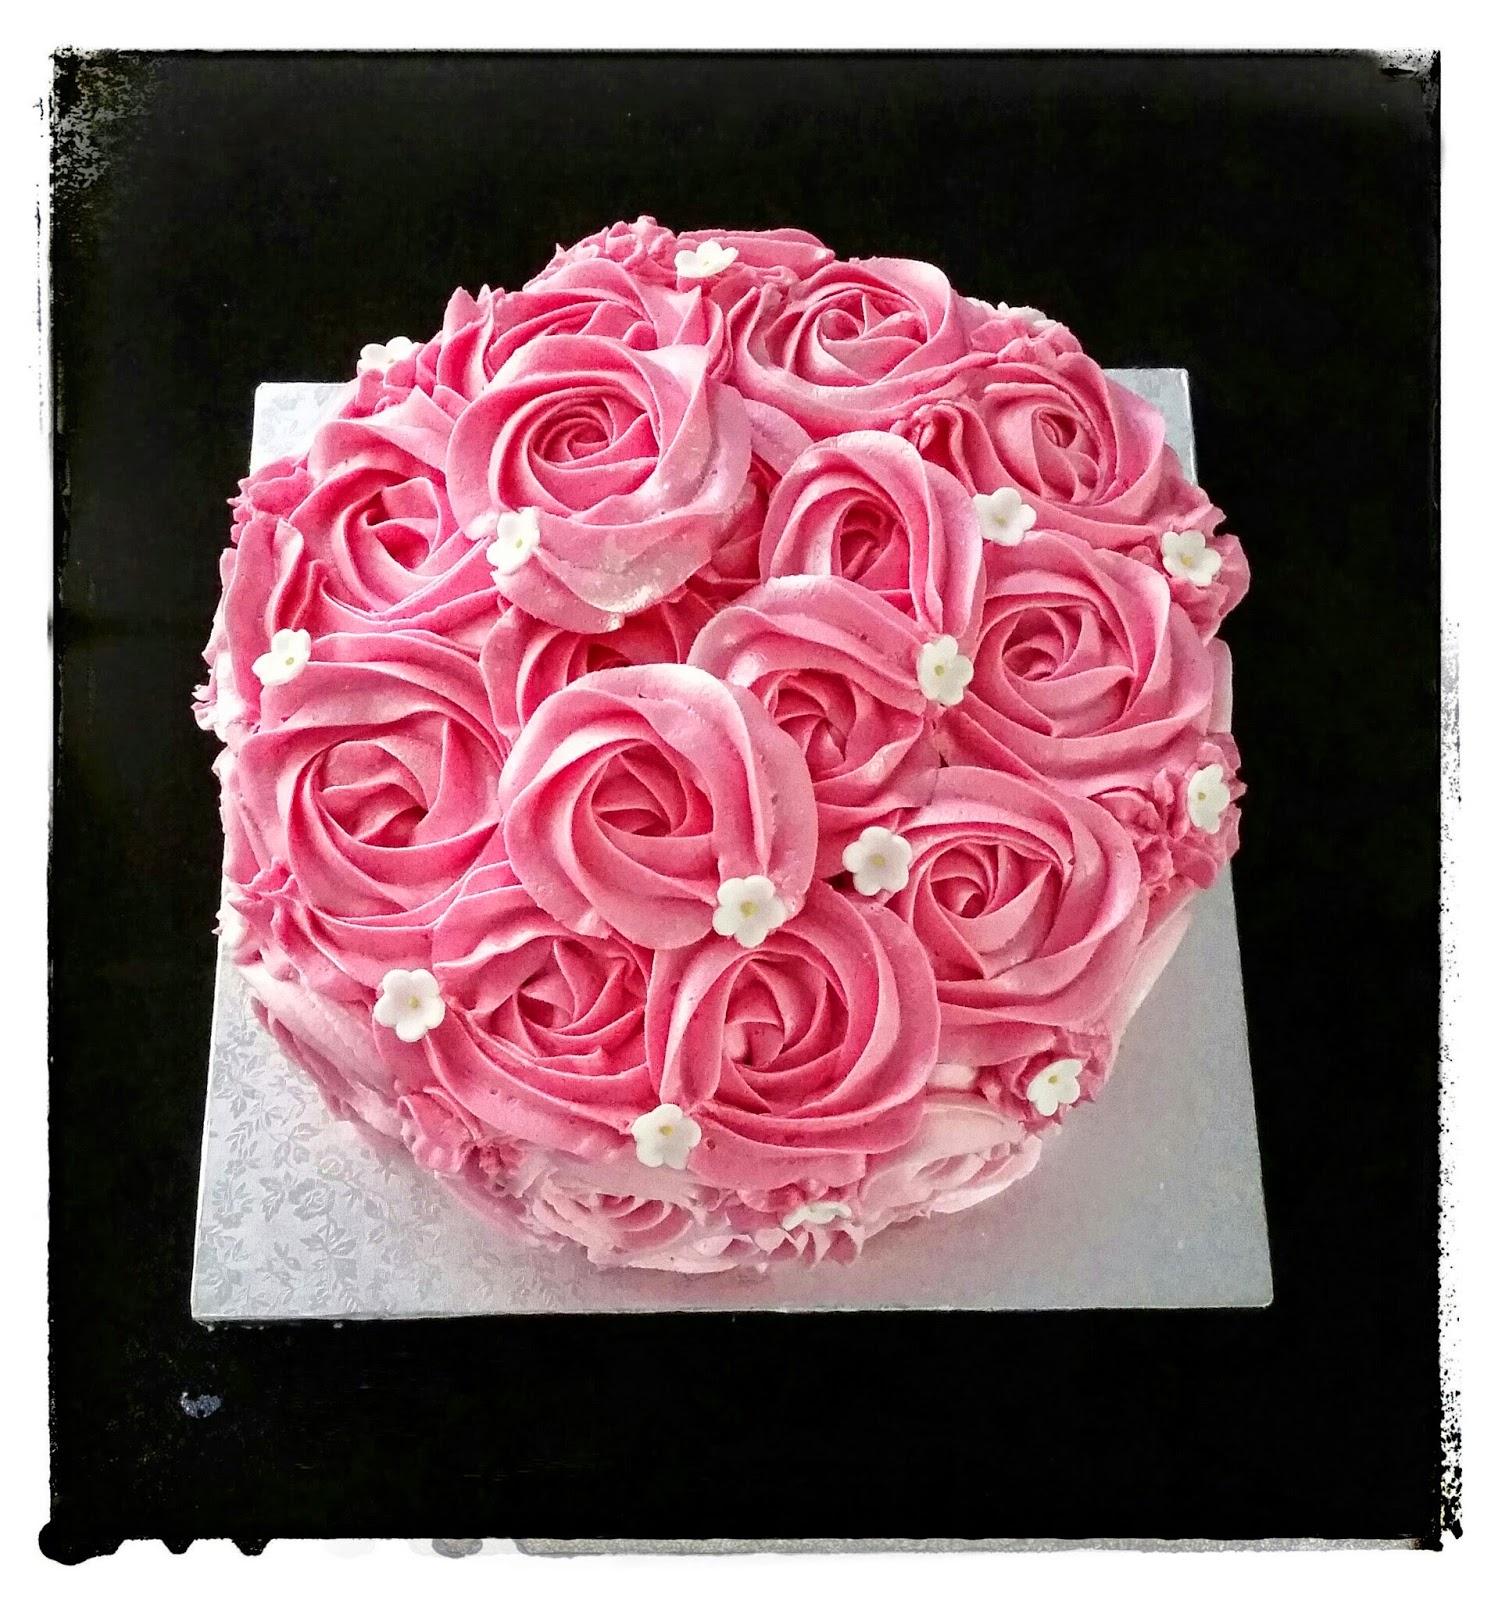 The Rose Cake